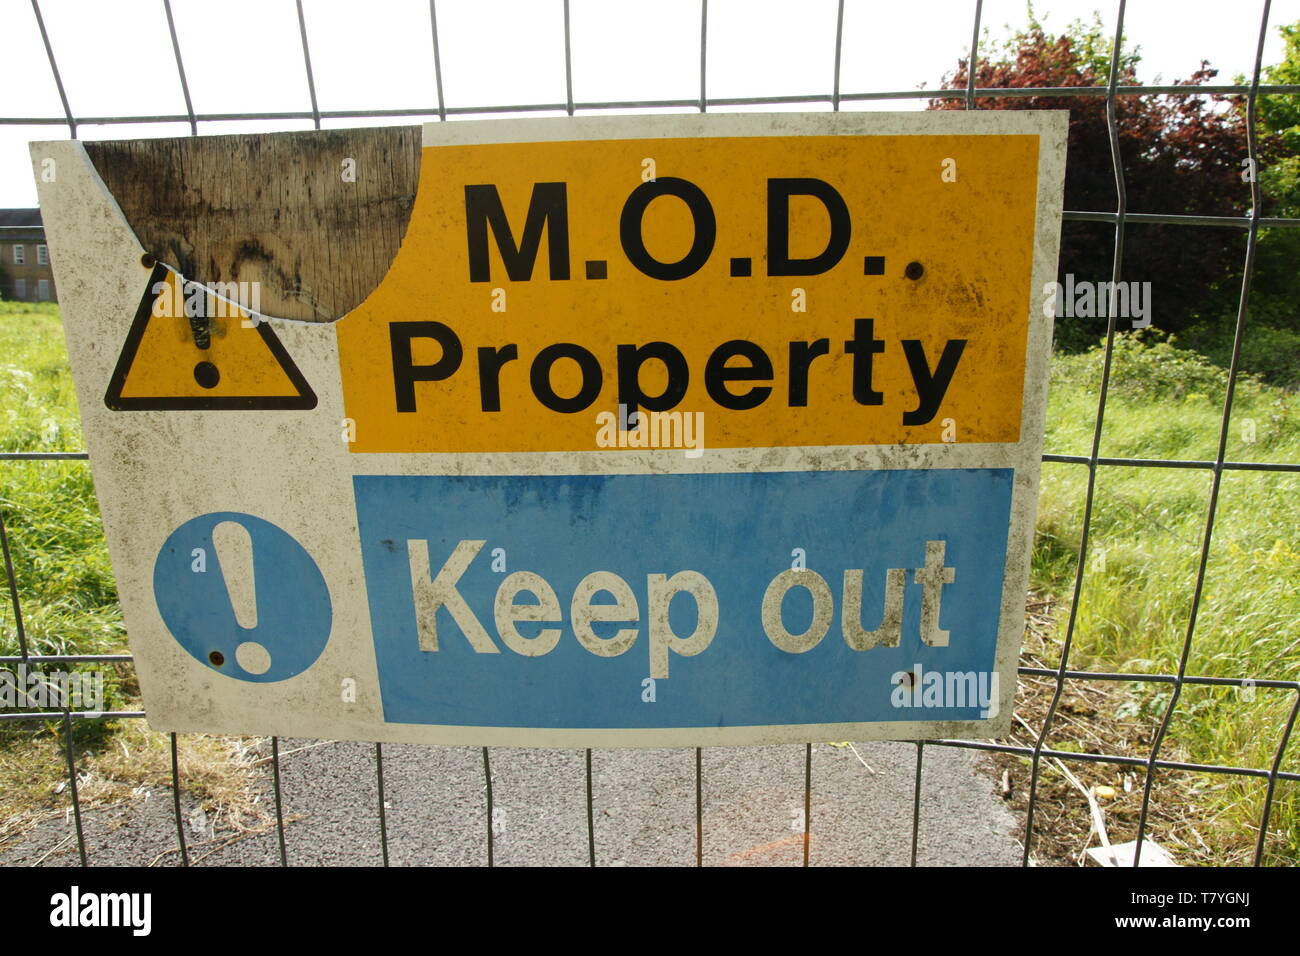 RAF Driffield, ww2 airfield, MOD Property, KEEP OUT Stock Photo